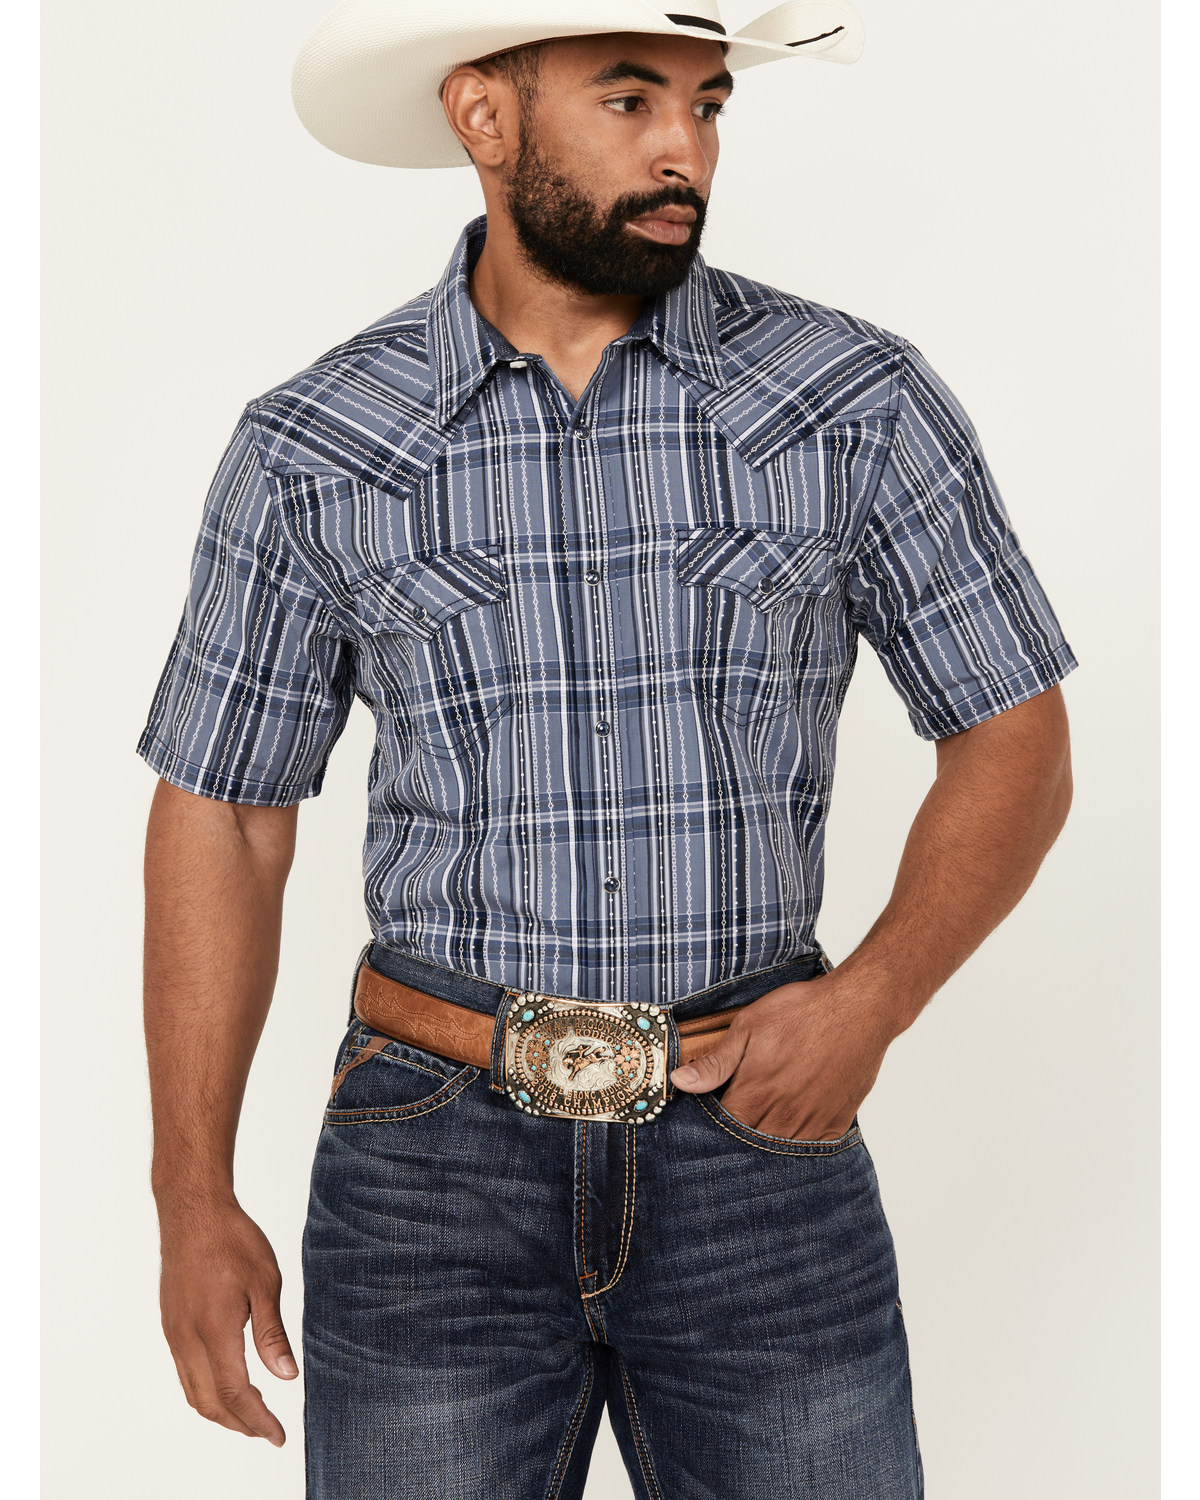 Cody James Men's Blue Lights Plaid Print Short Sleeve Snap Western Shirt